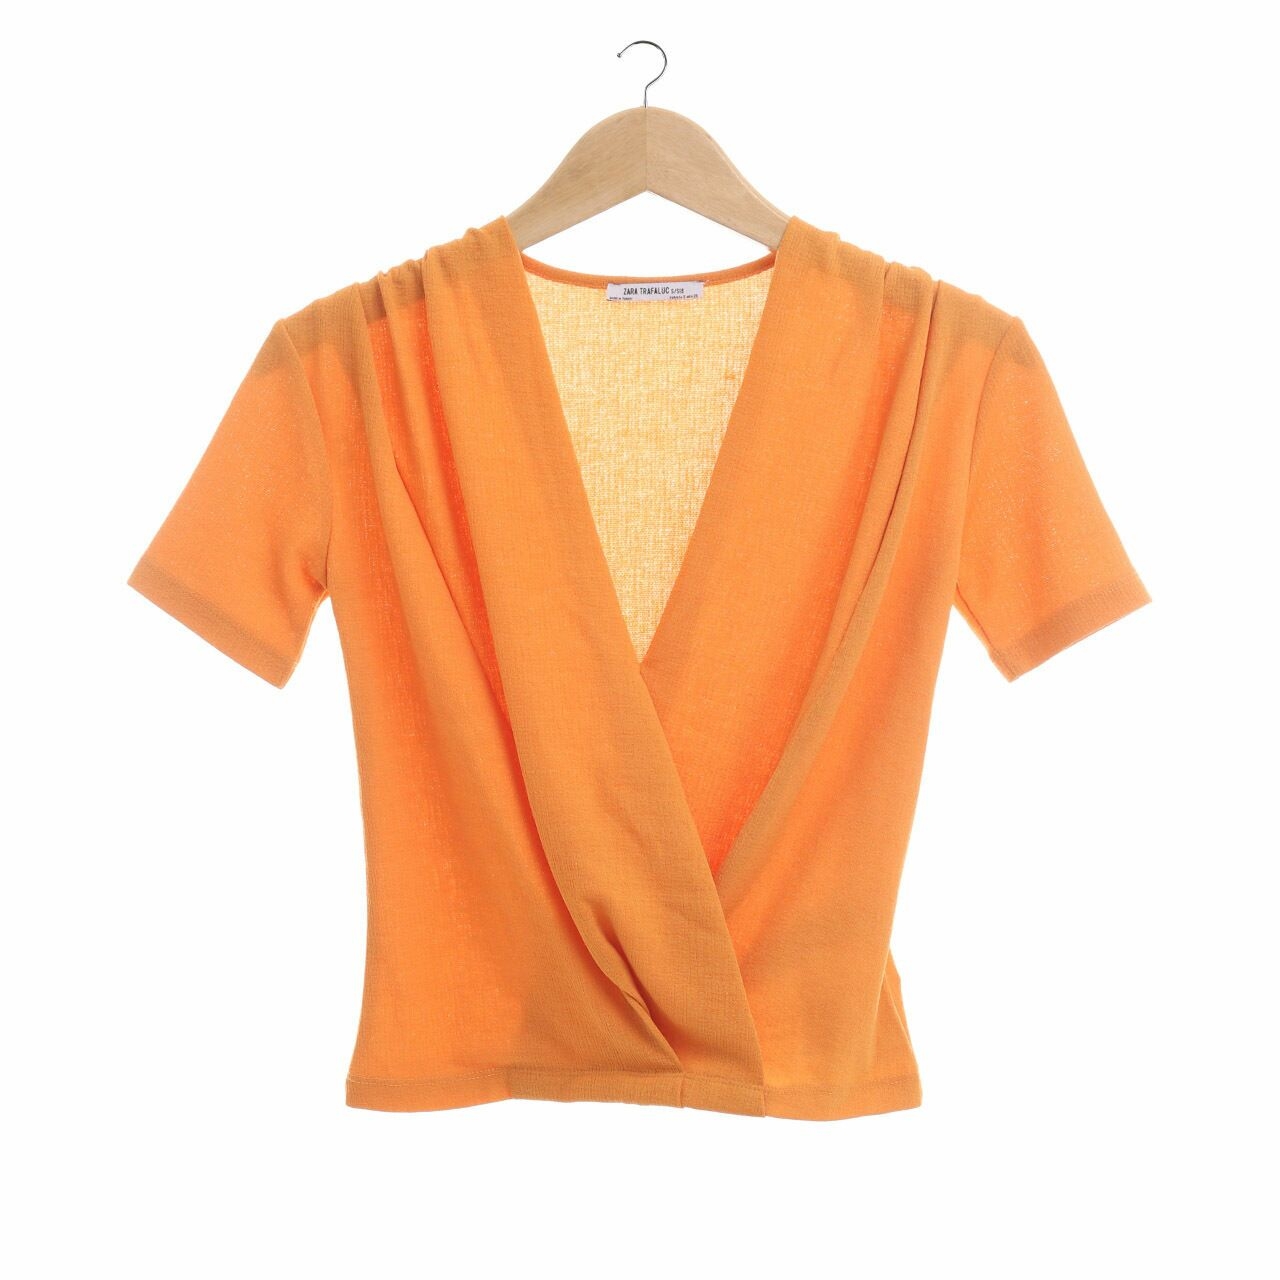 Zara Orange Wrap Blouse